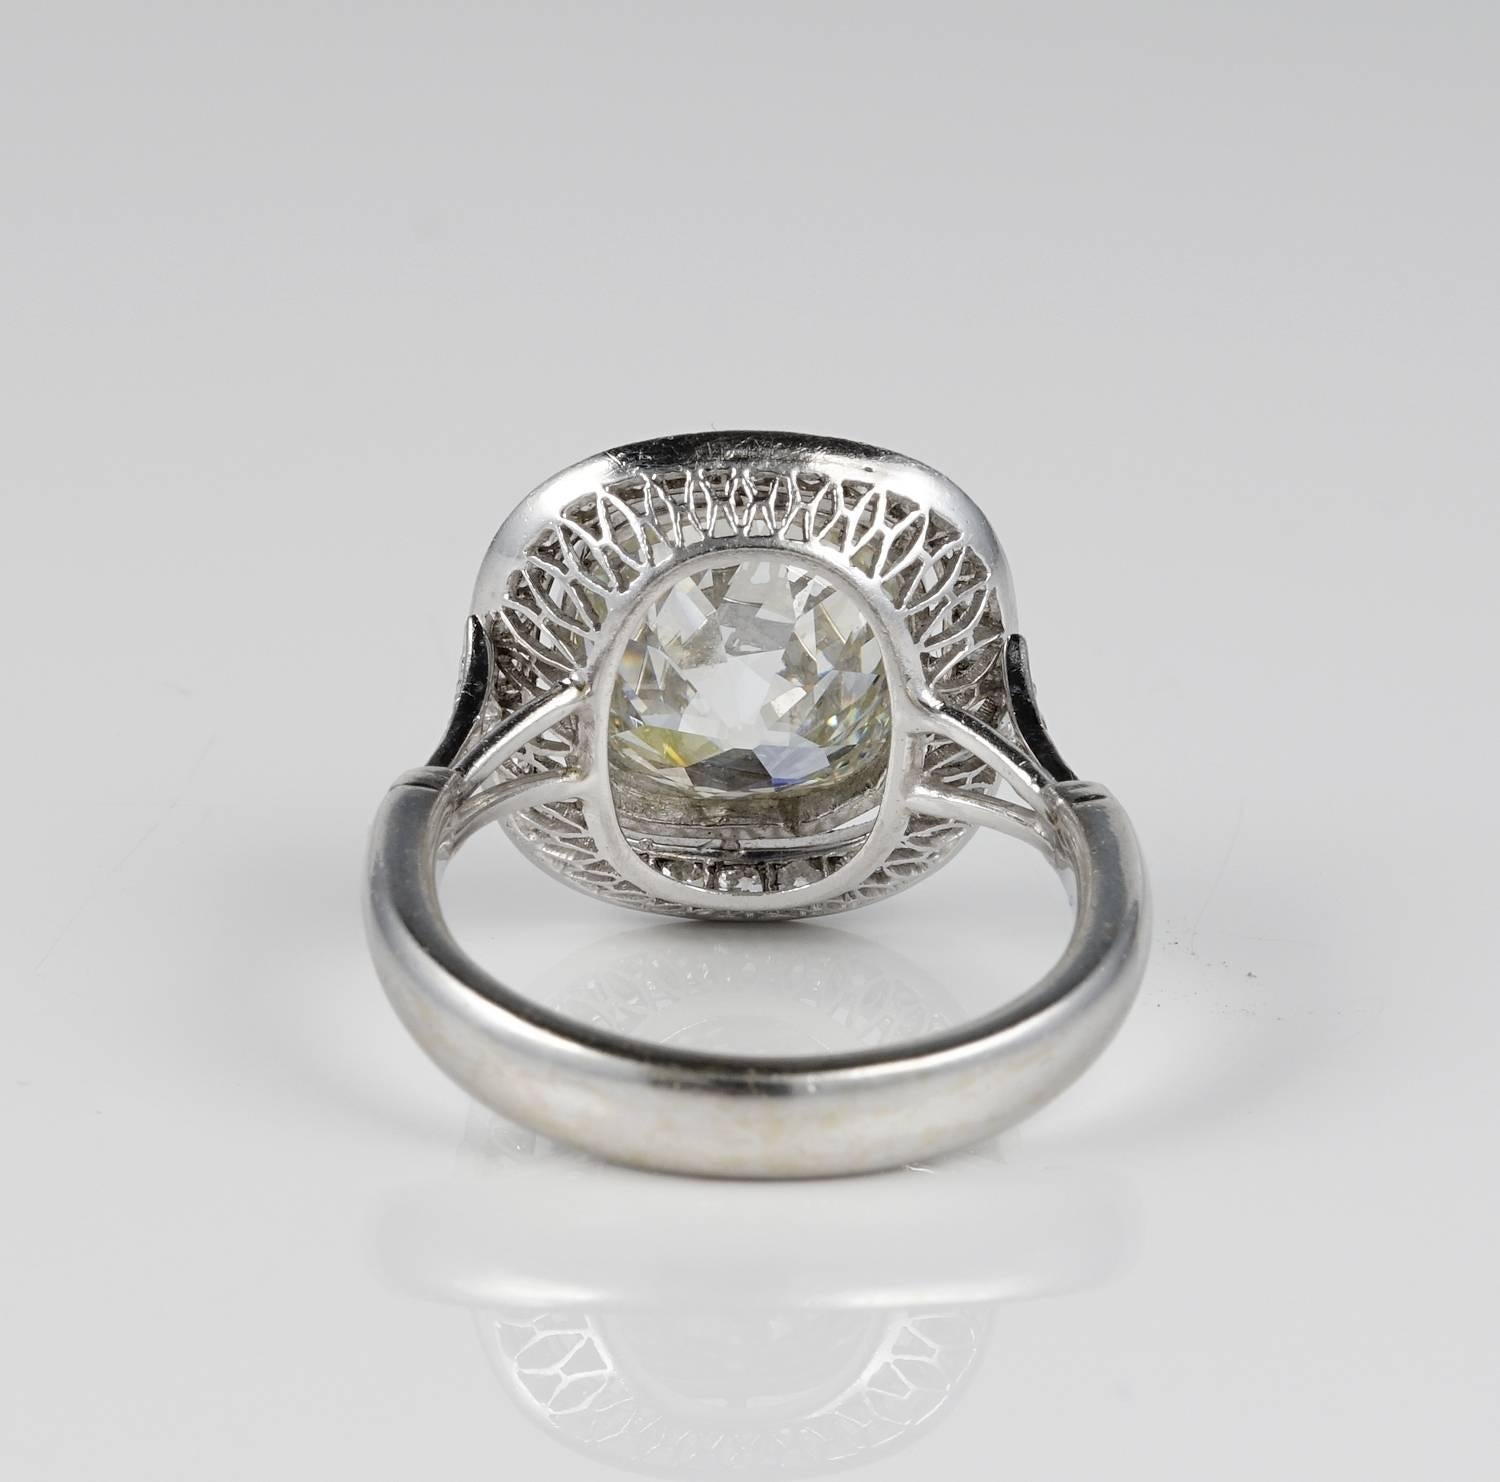  4.20 Carat Diamond Solitaire Plus Platinum Ring In Good Condition For Sale In Napoli, IT